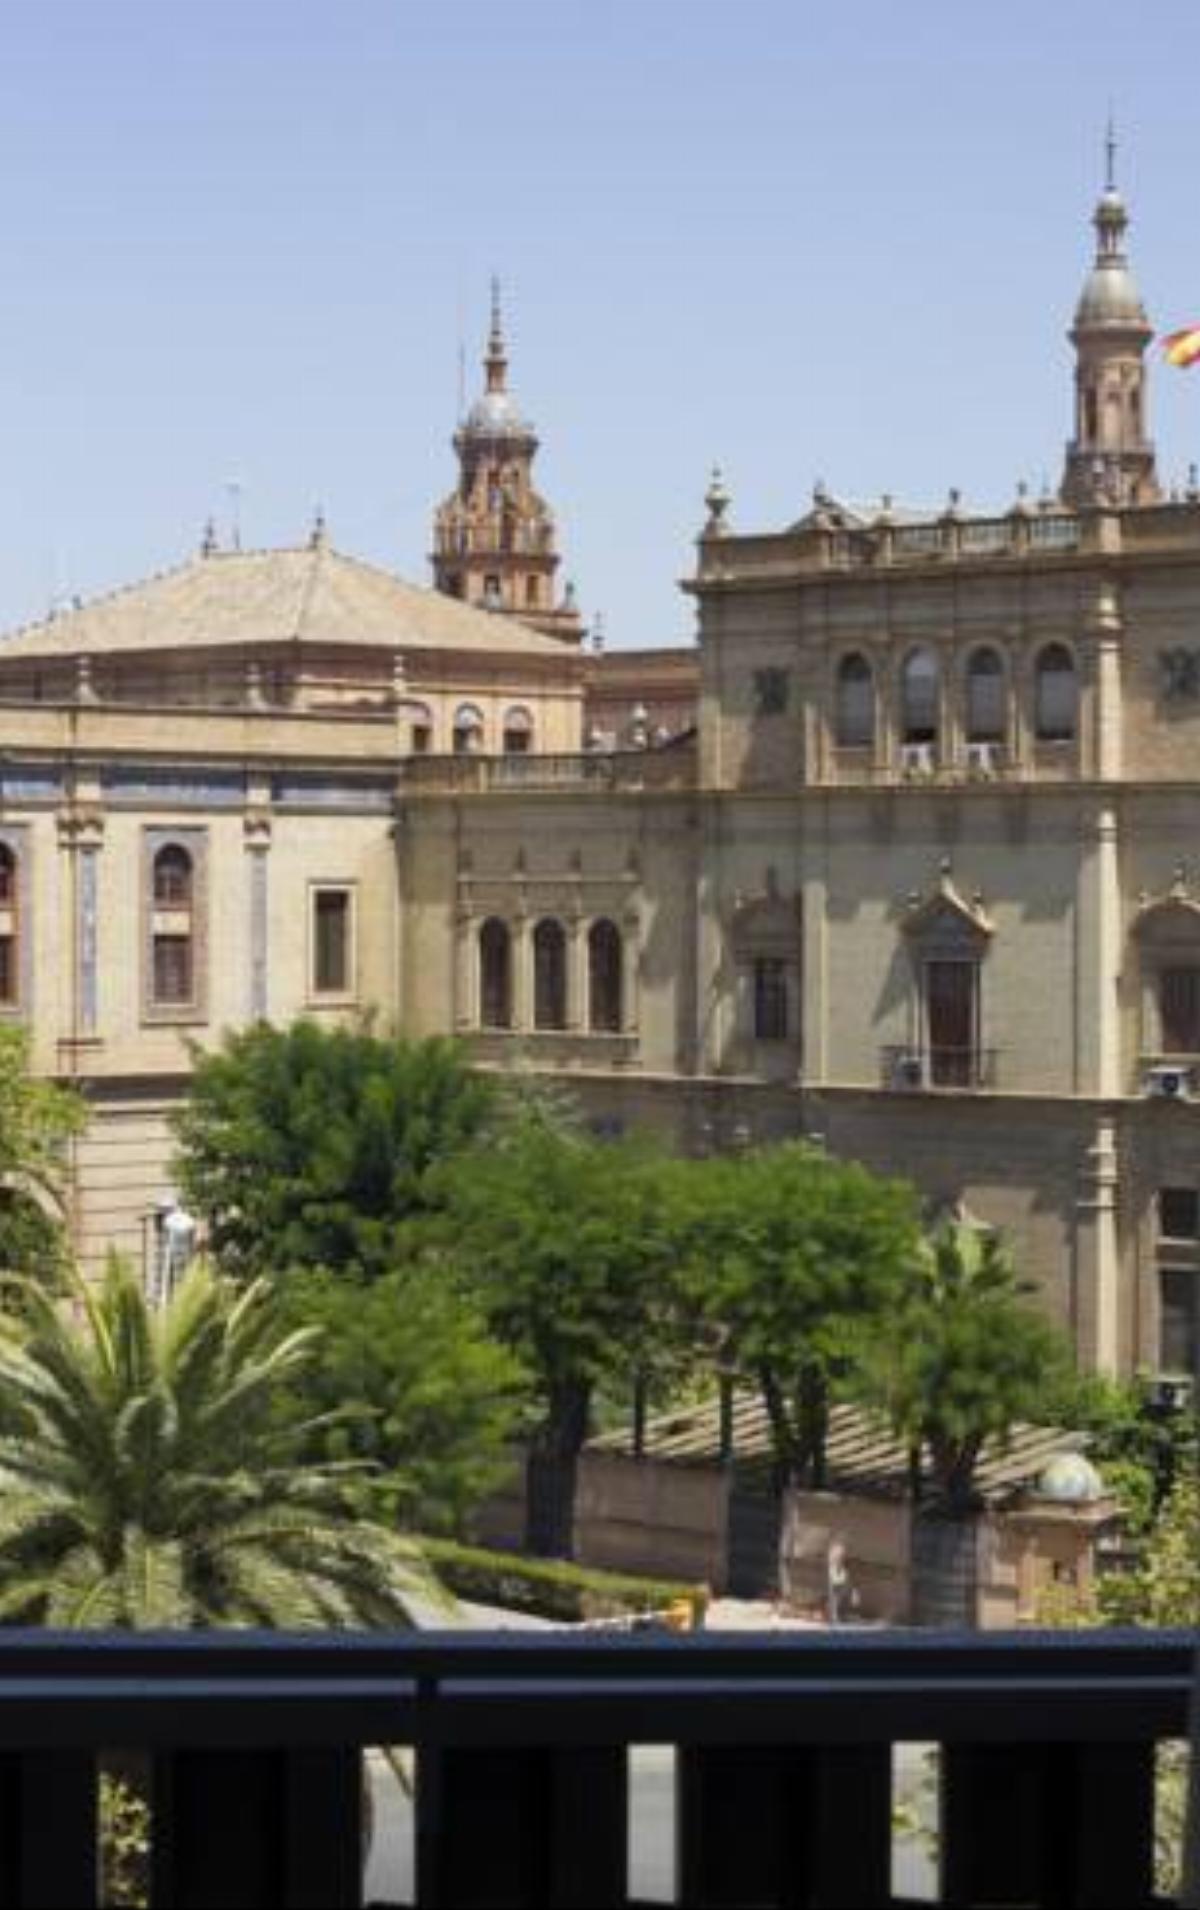 Pasarela Hotel Seville Spain